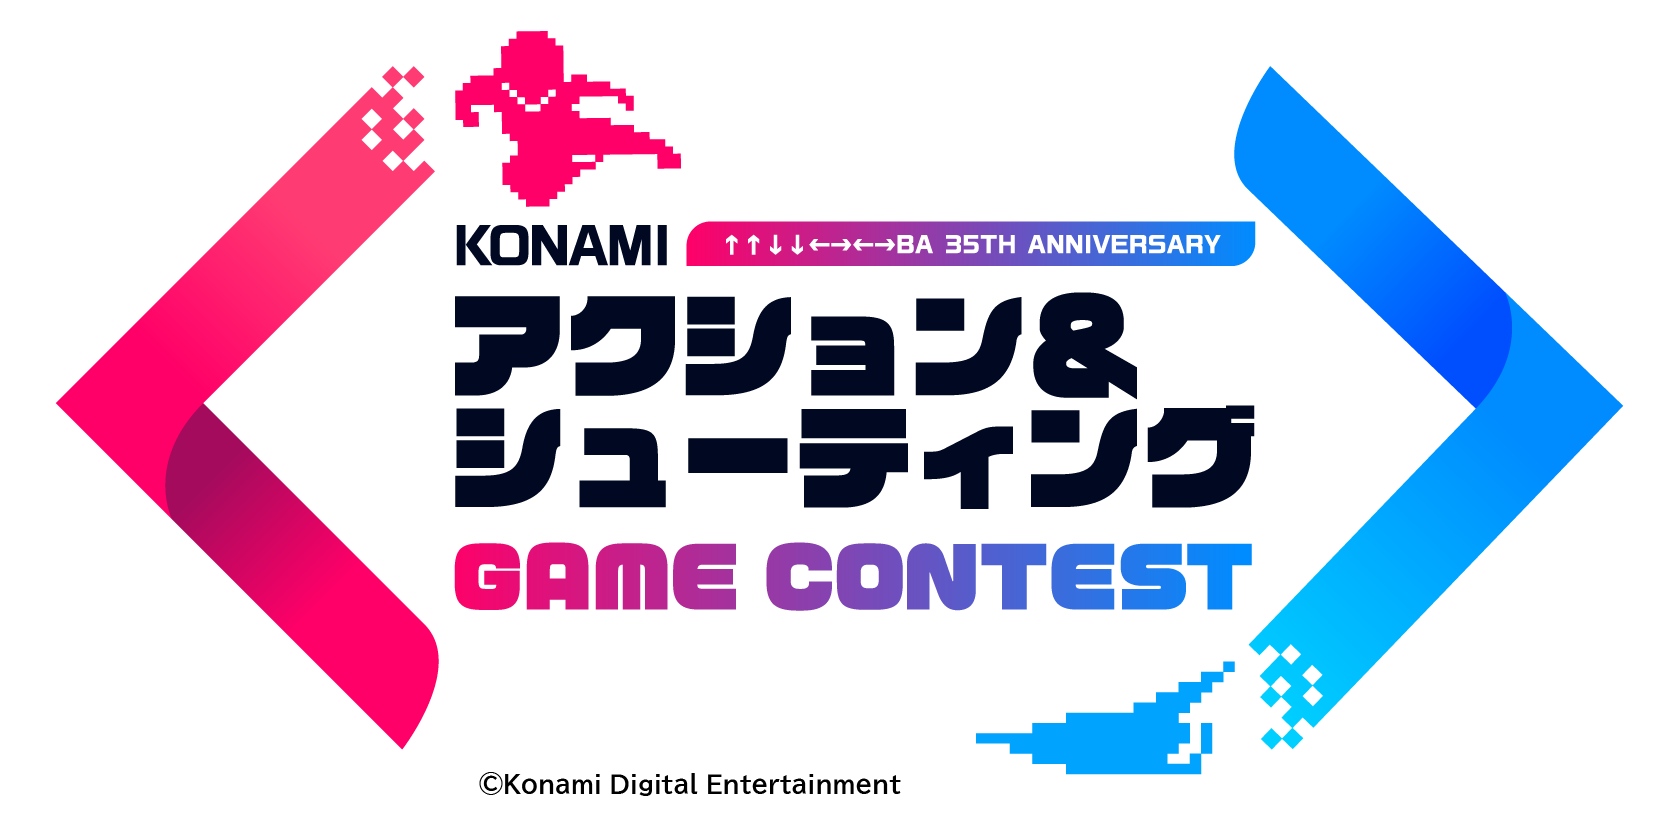 Konamiタイトルを題材にしたゲーム企画を大募集 Konamiアクション シューティングゲームコンテスト 開催 対象80タイトルの中から好きな作品を選んでエントリー可能 株式会社コナミデジタルエンタテインメントのプレスリリース